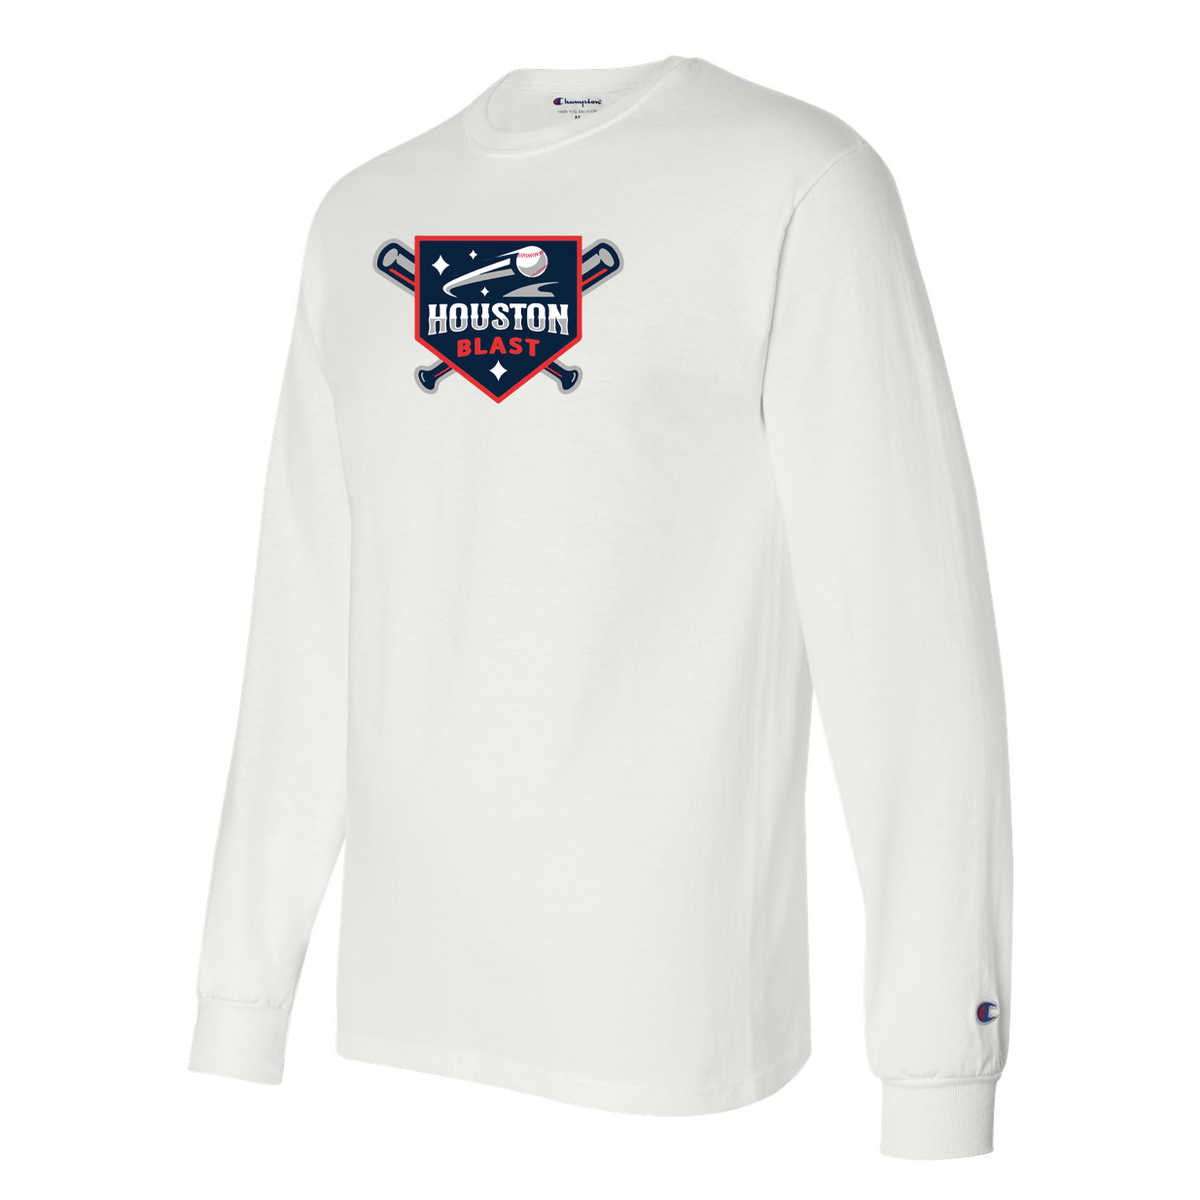 Houston Blast Baseball Champion Long Sleeve T-Shirt